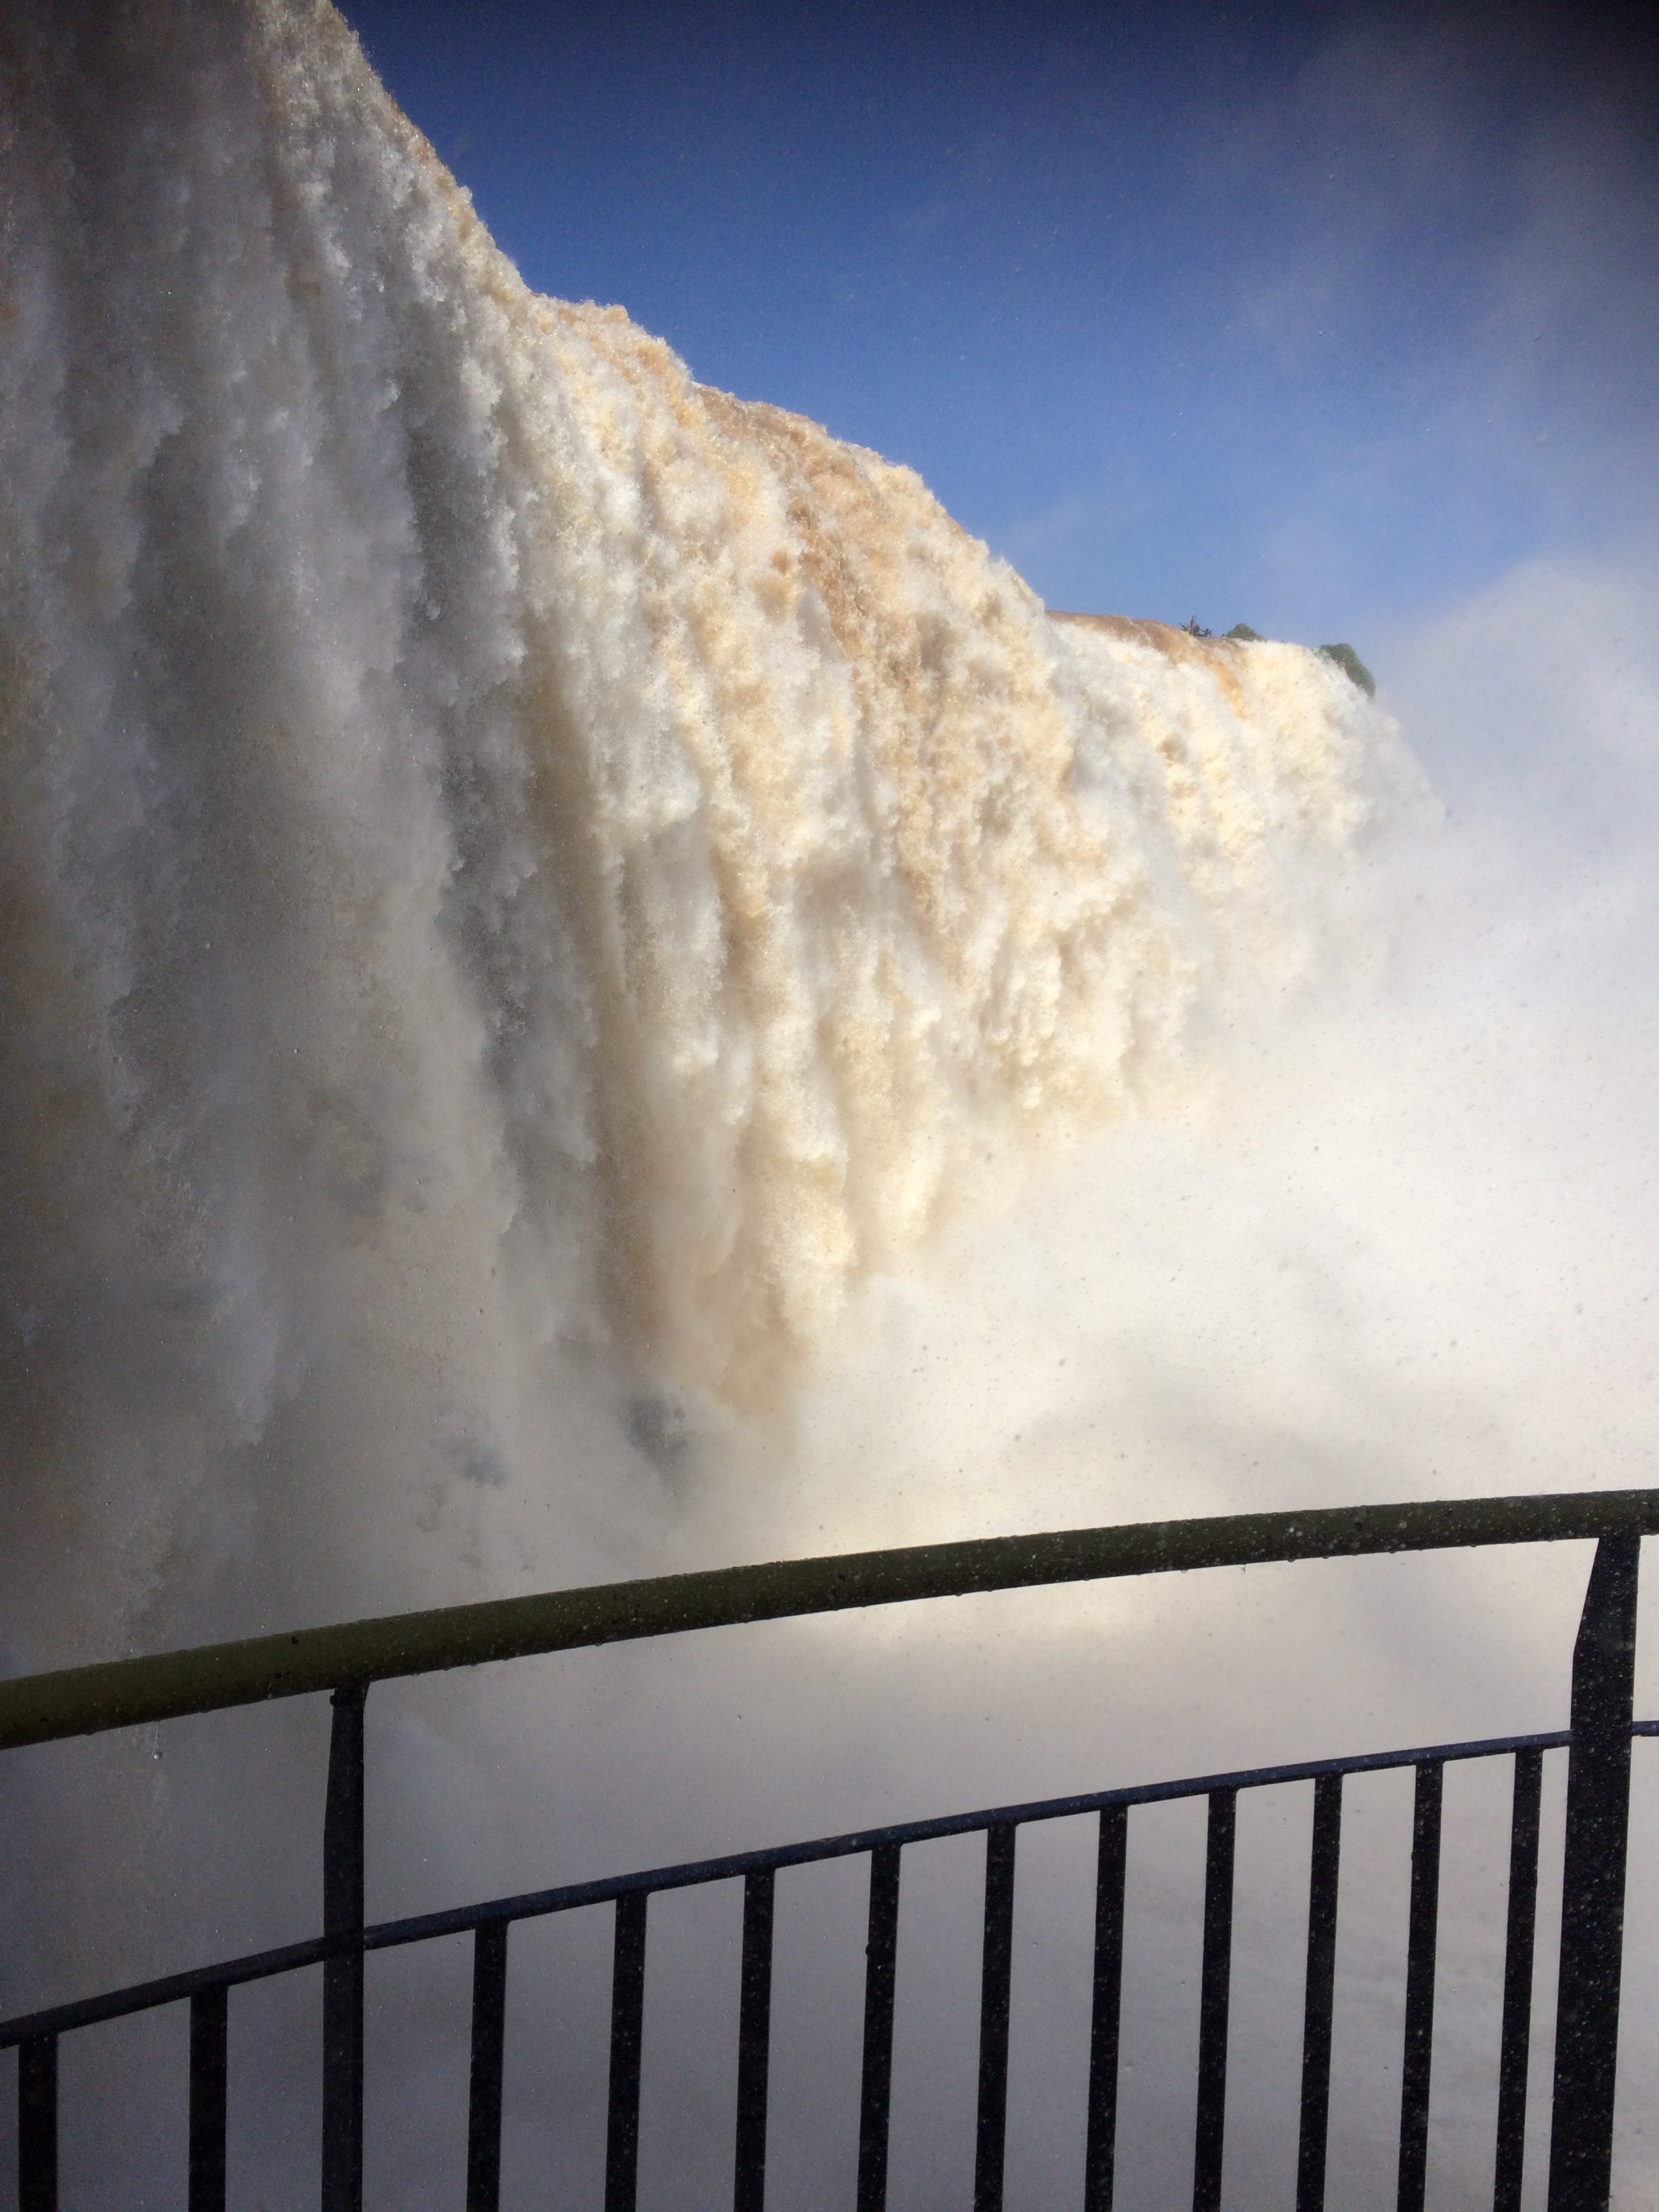 Iguazu Falls Up Close